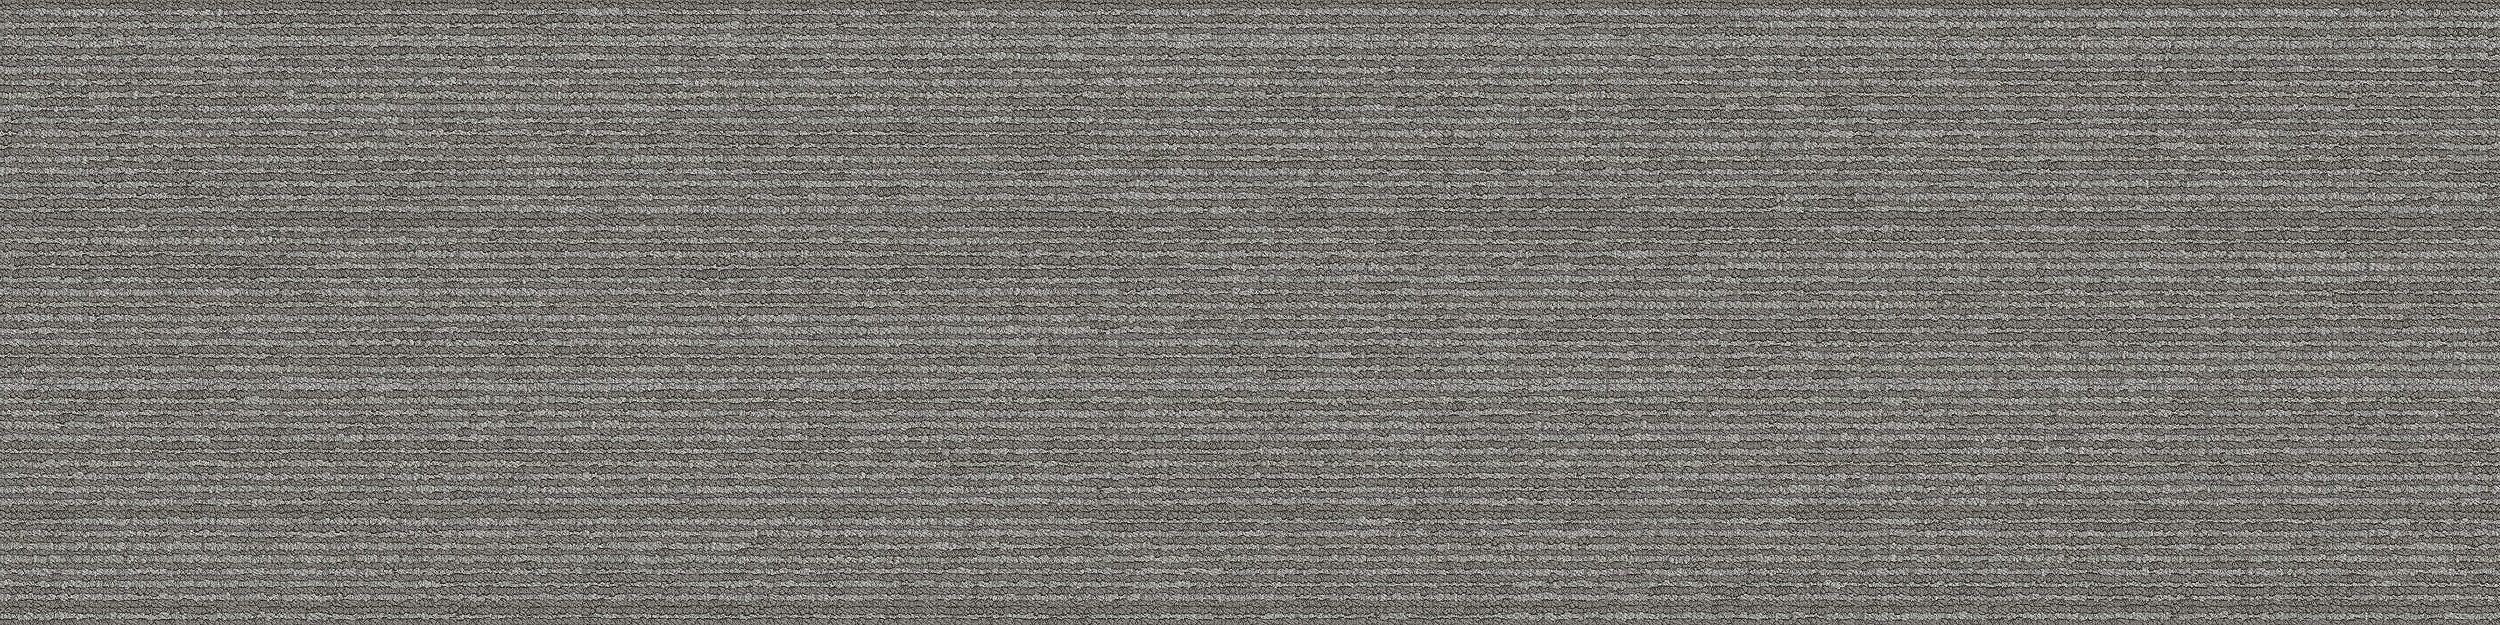 CE171 Carpet Tile In Samurai imagen número 4